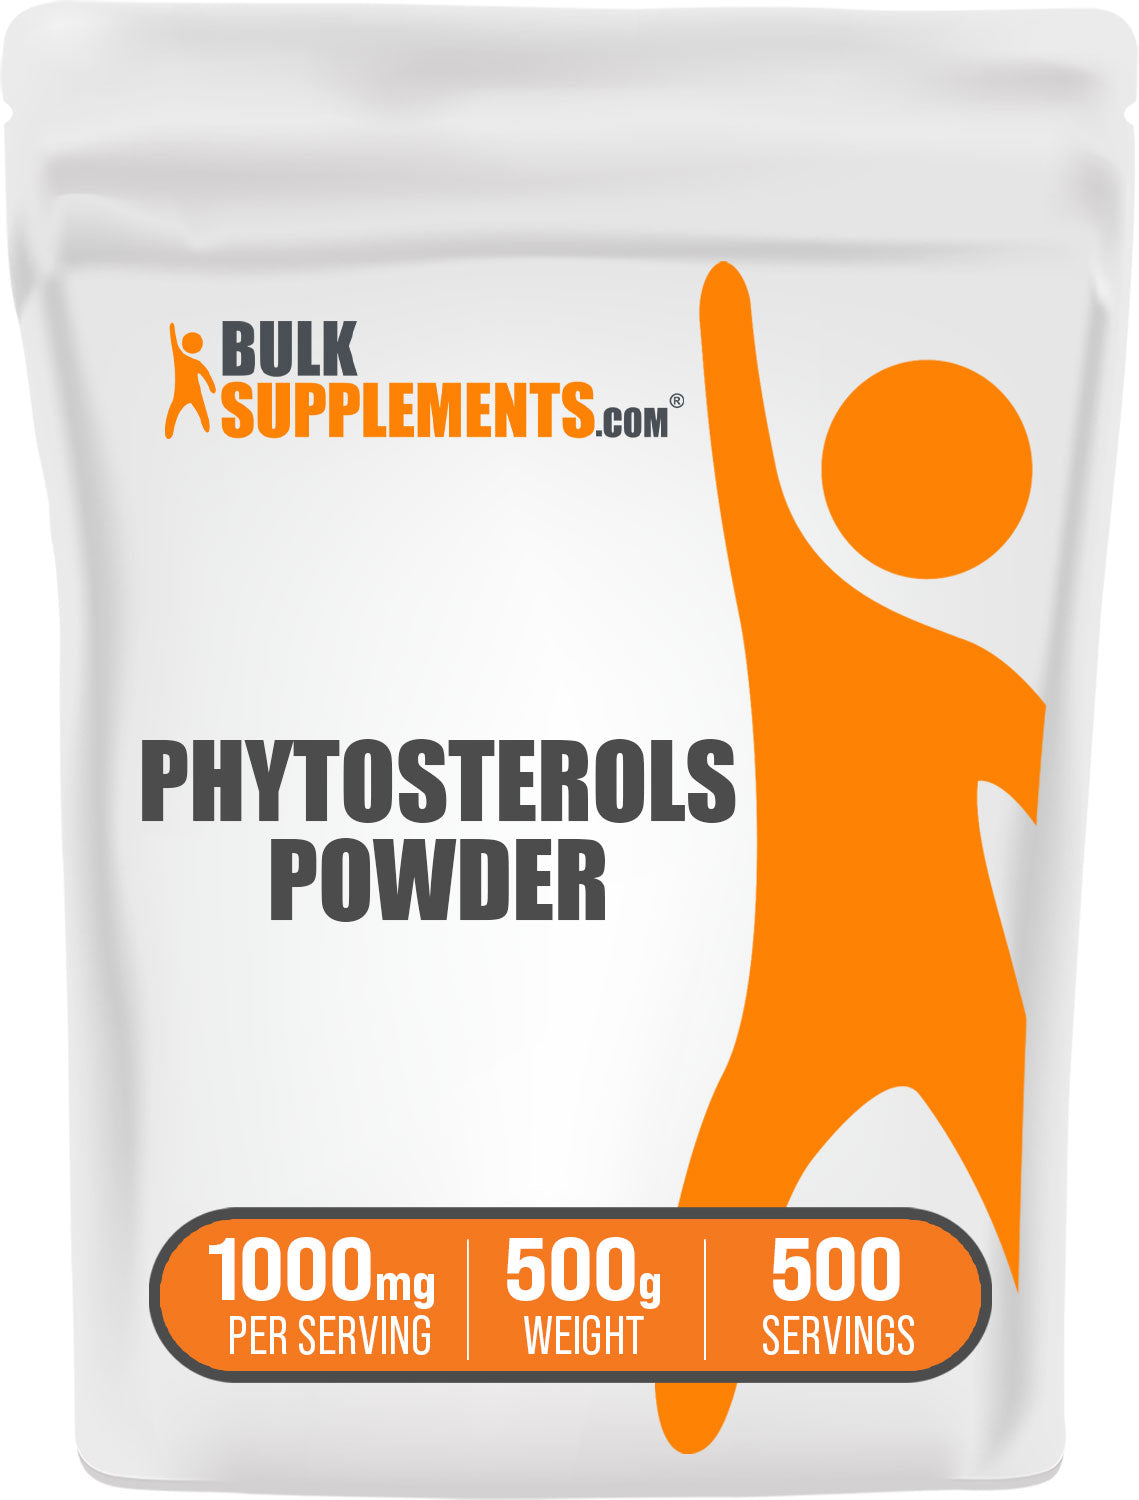 BulkSupplements Phytosterols Powder 500g bag